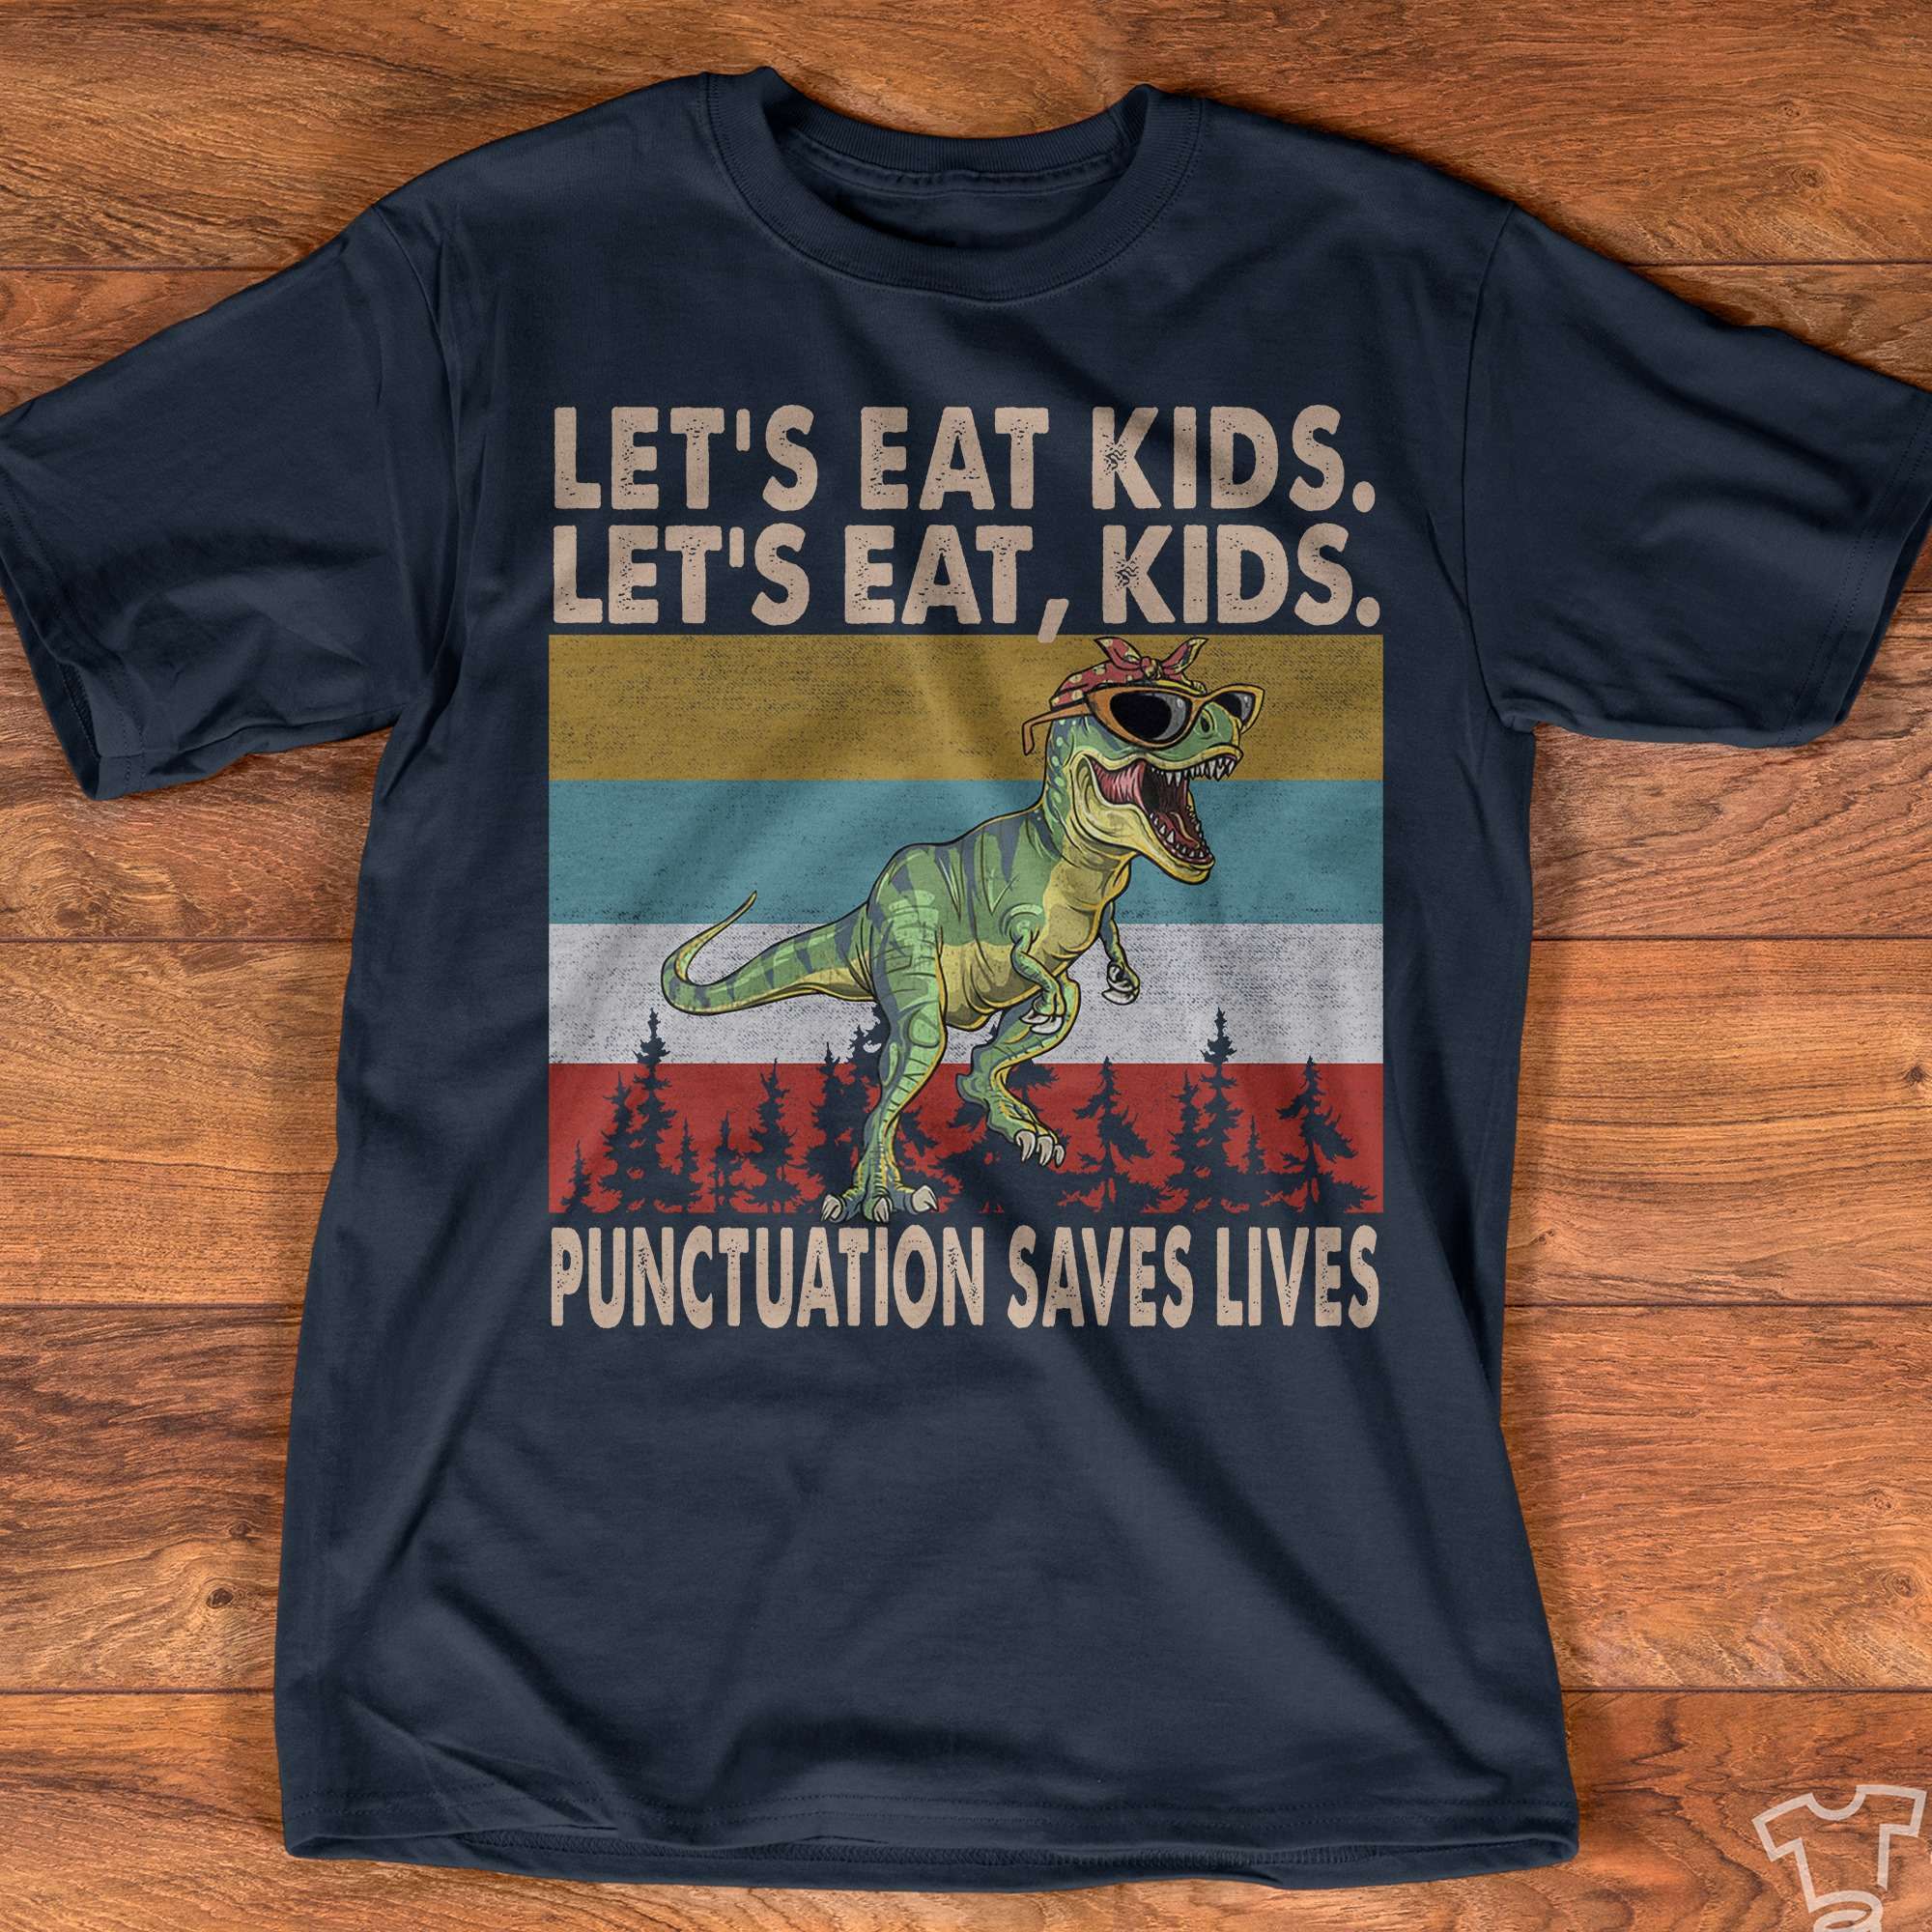 Dinosaurs Halloween - Let's eat kids let's eat kids punctuation saves lives